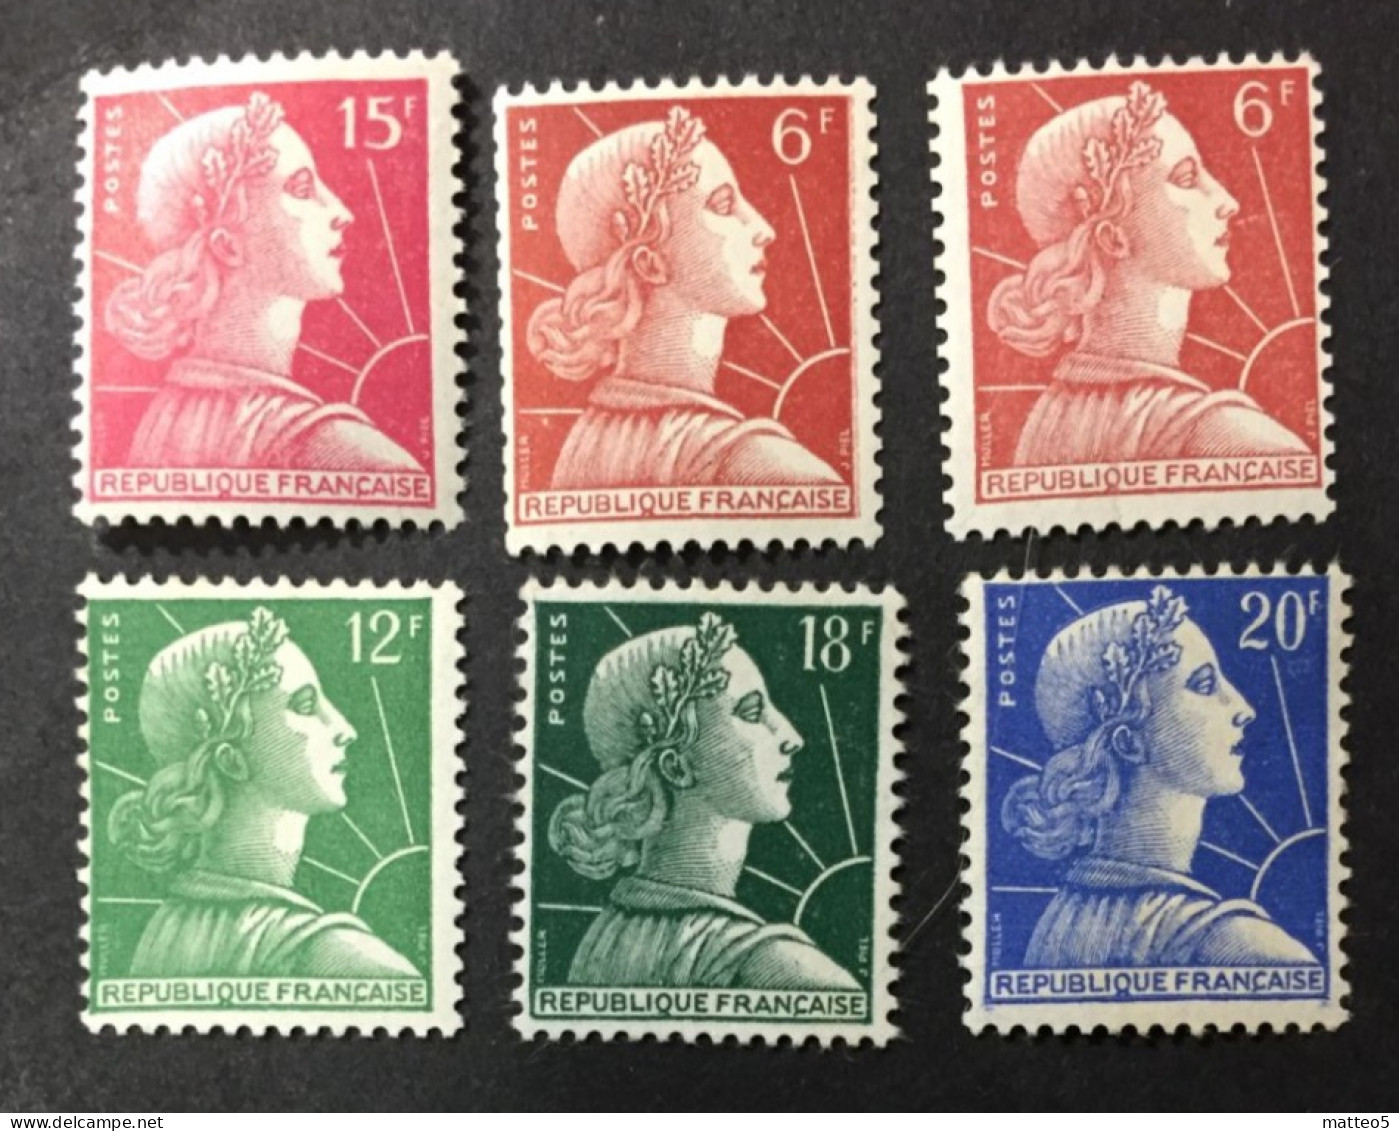 1955 /59  France - Liberty - Marianne De Muller - 6  Stamps Unused - 1955-1961 Marianne (Muller)